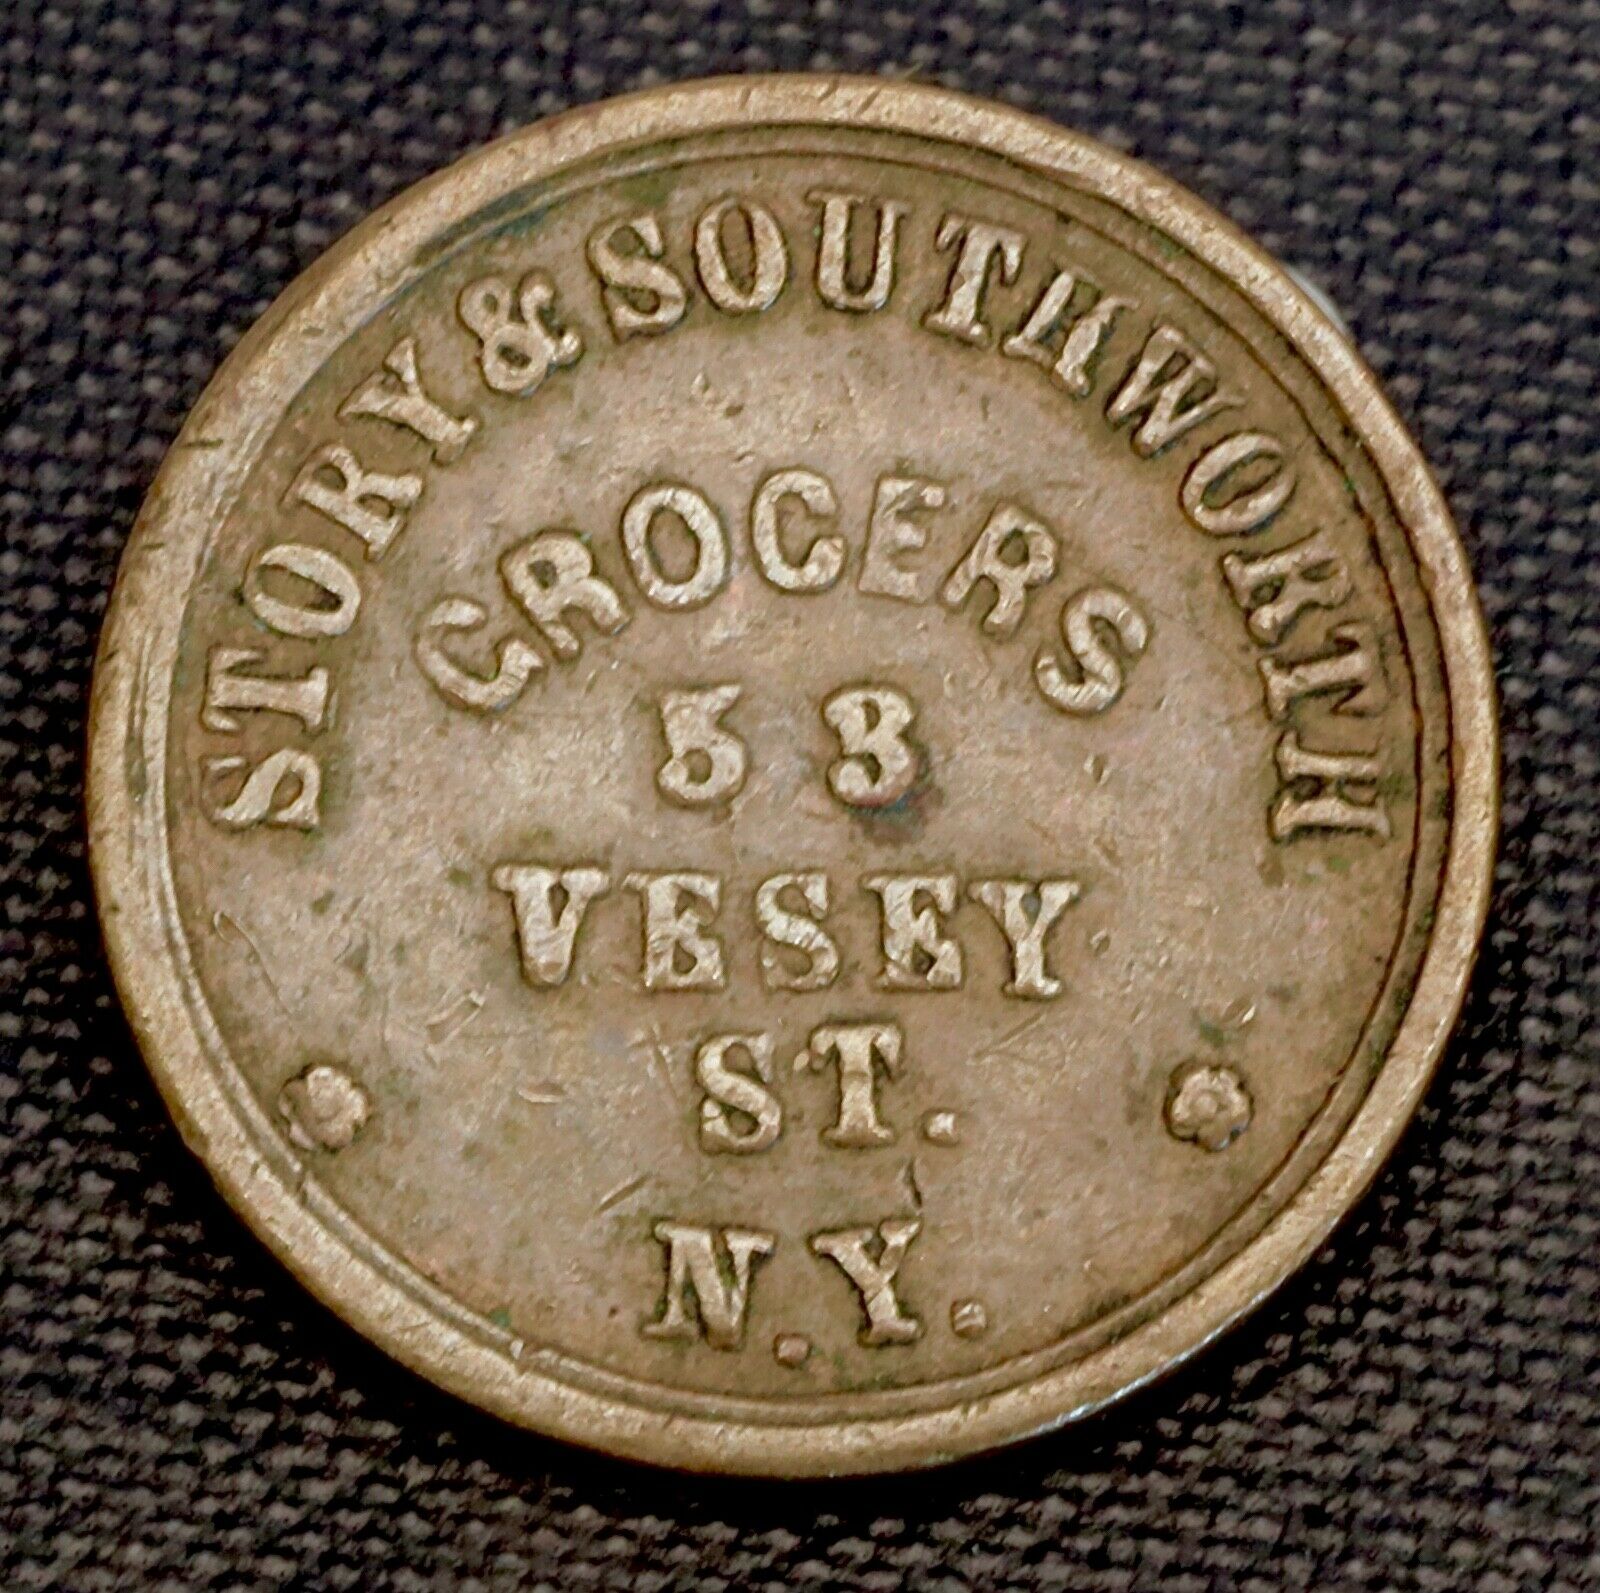 1863 Civil War Token - Story & Southworth Grocers - New York N.y.